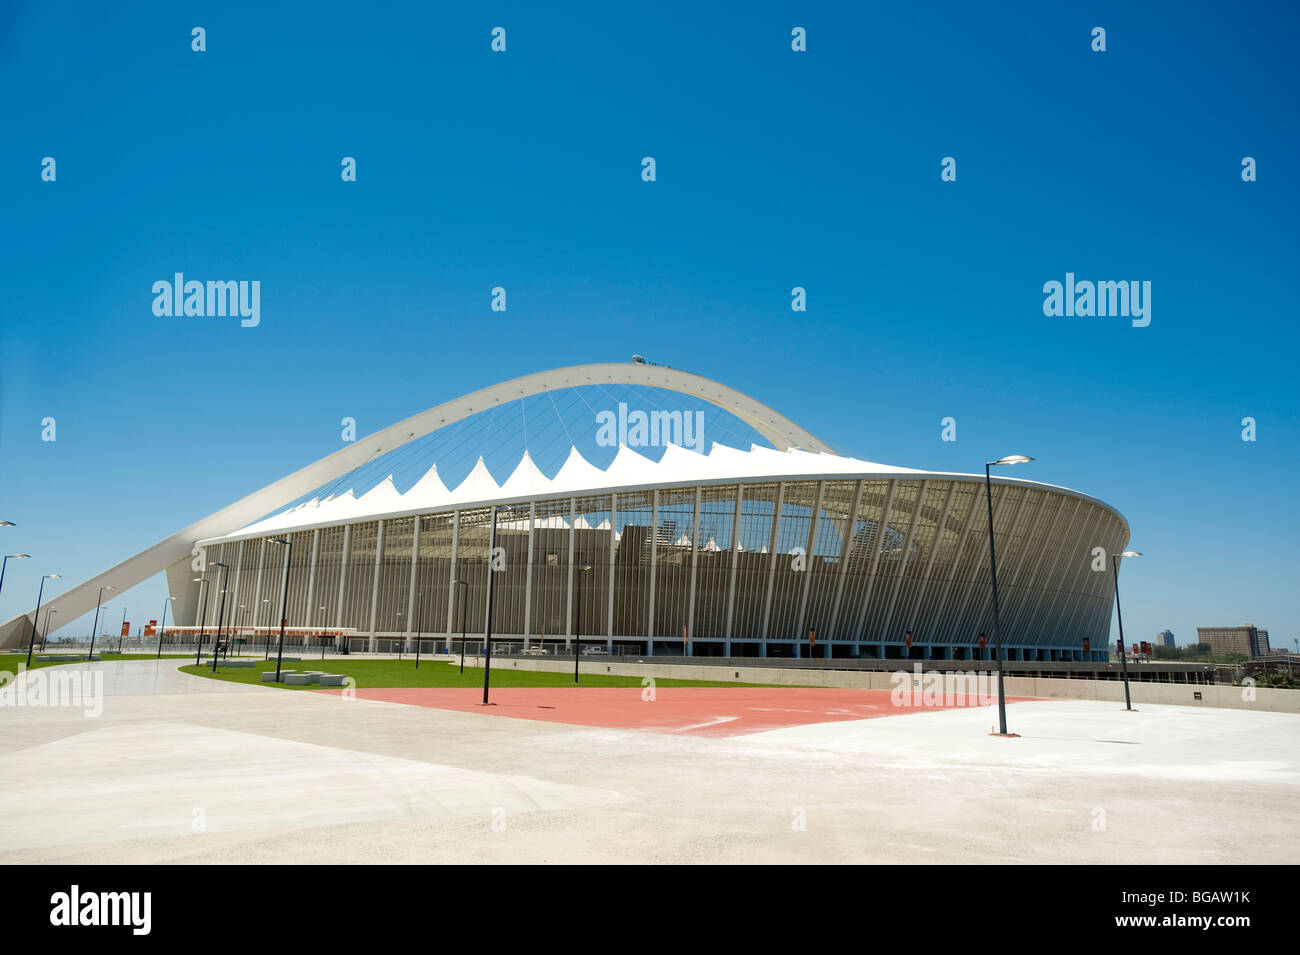 The Durban Moses Mabhida Soccer Stadium. Durban, South Africa Stock Photo